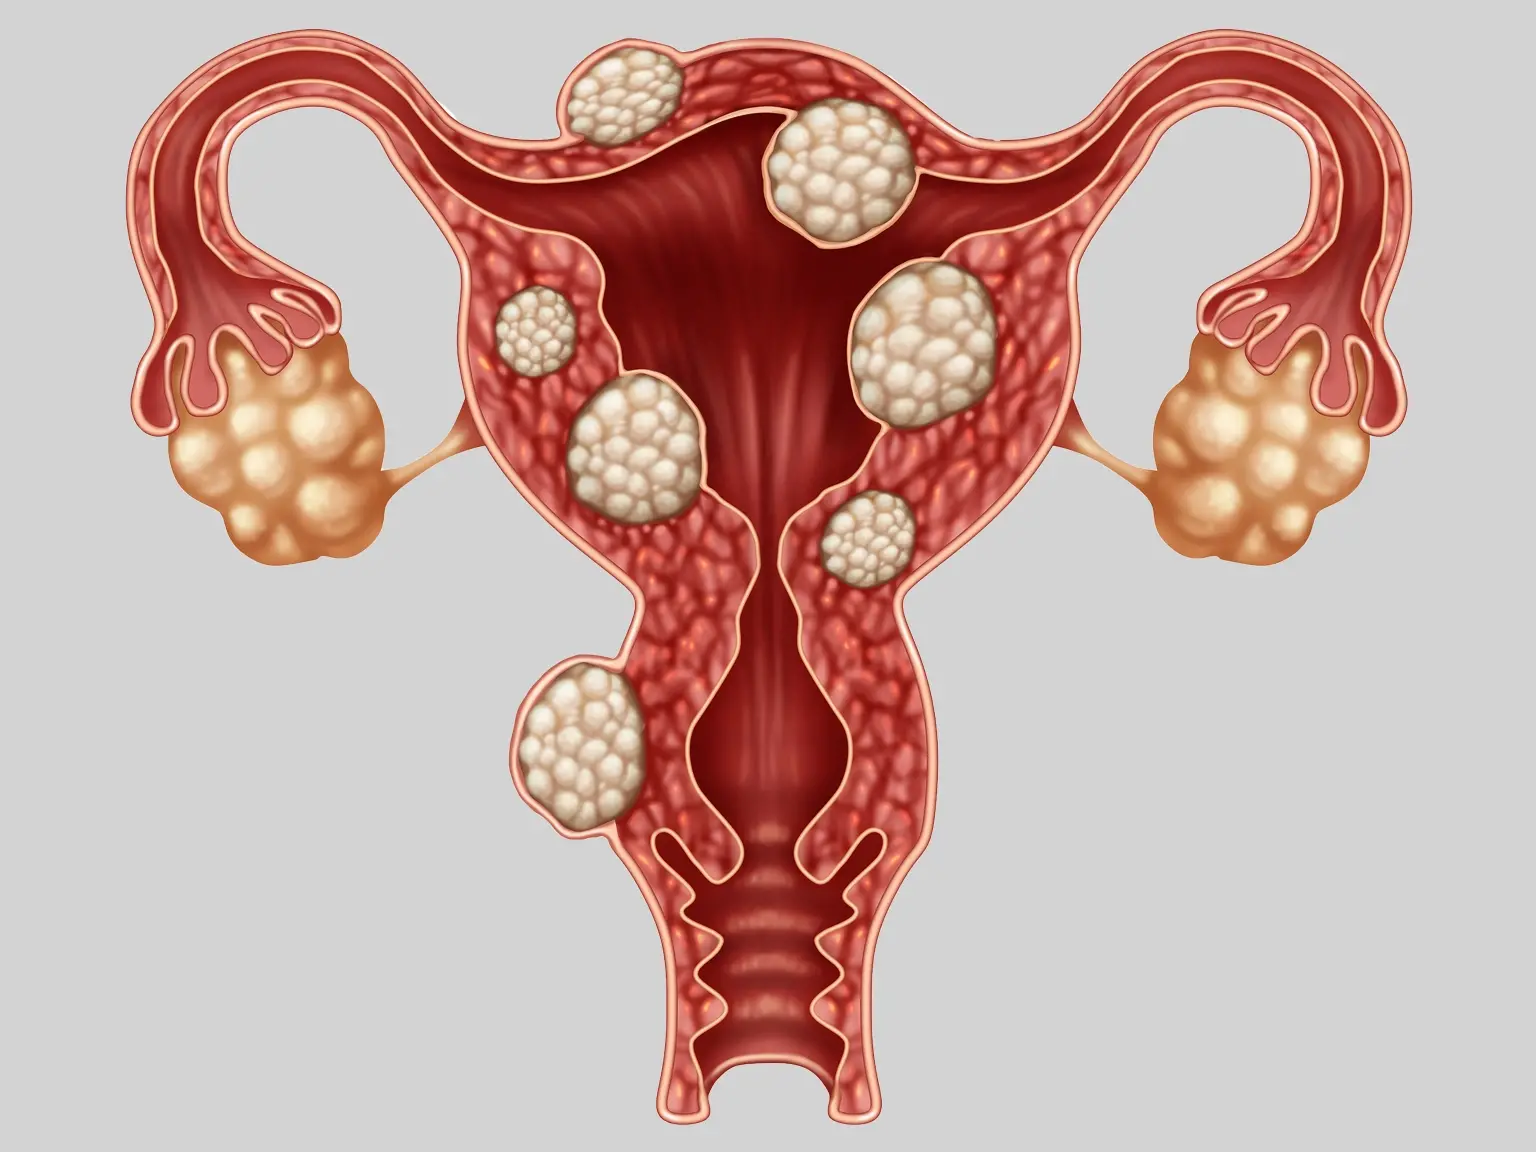 Endometriose 1